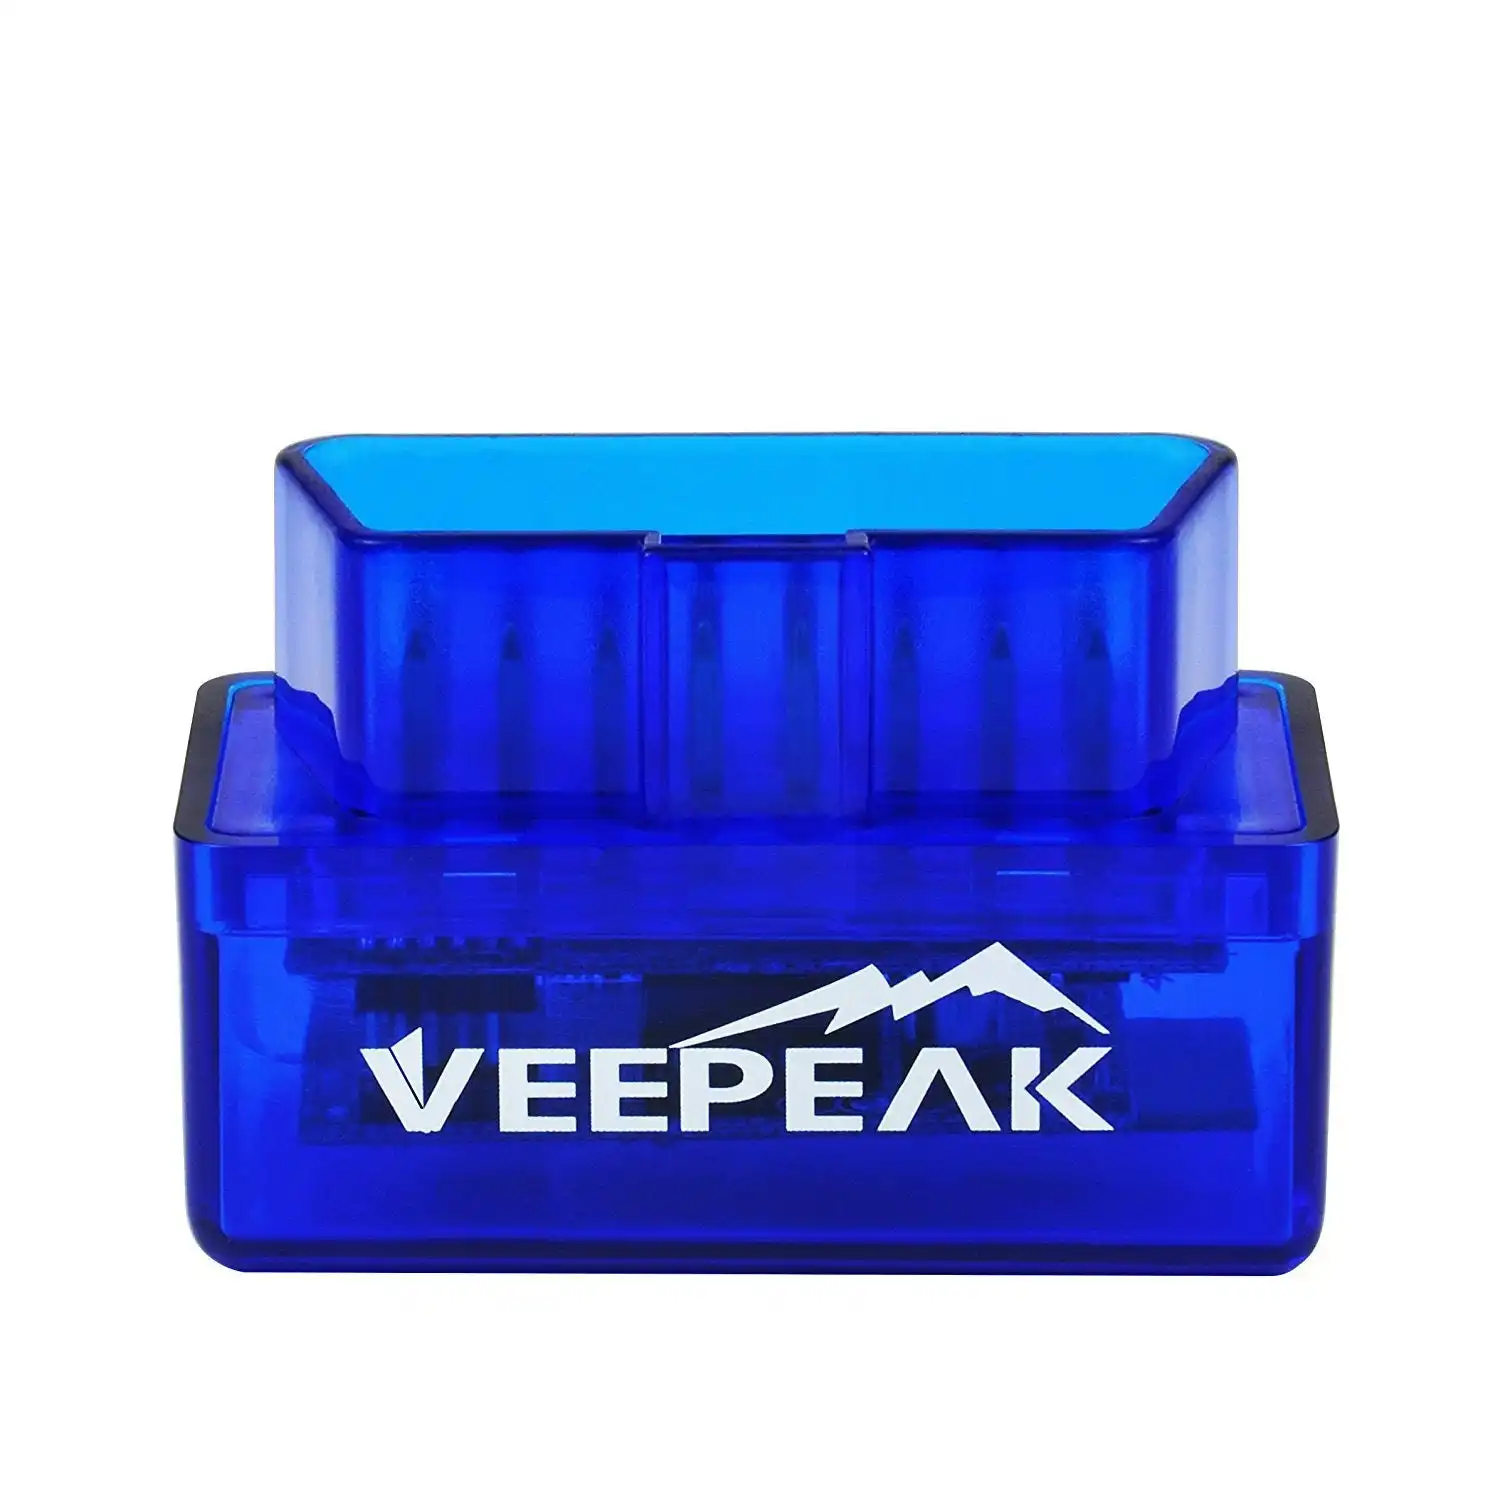 Veepeak Mini Bluetooth OBD2 OBD II Scanner Car Engine Code Reader.